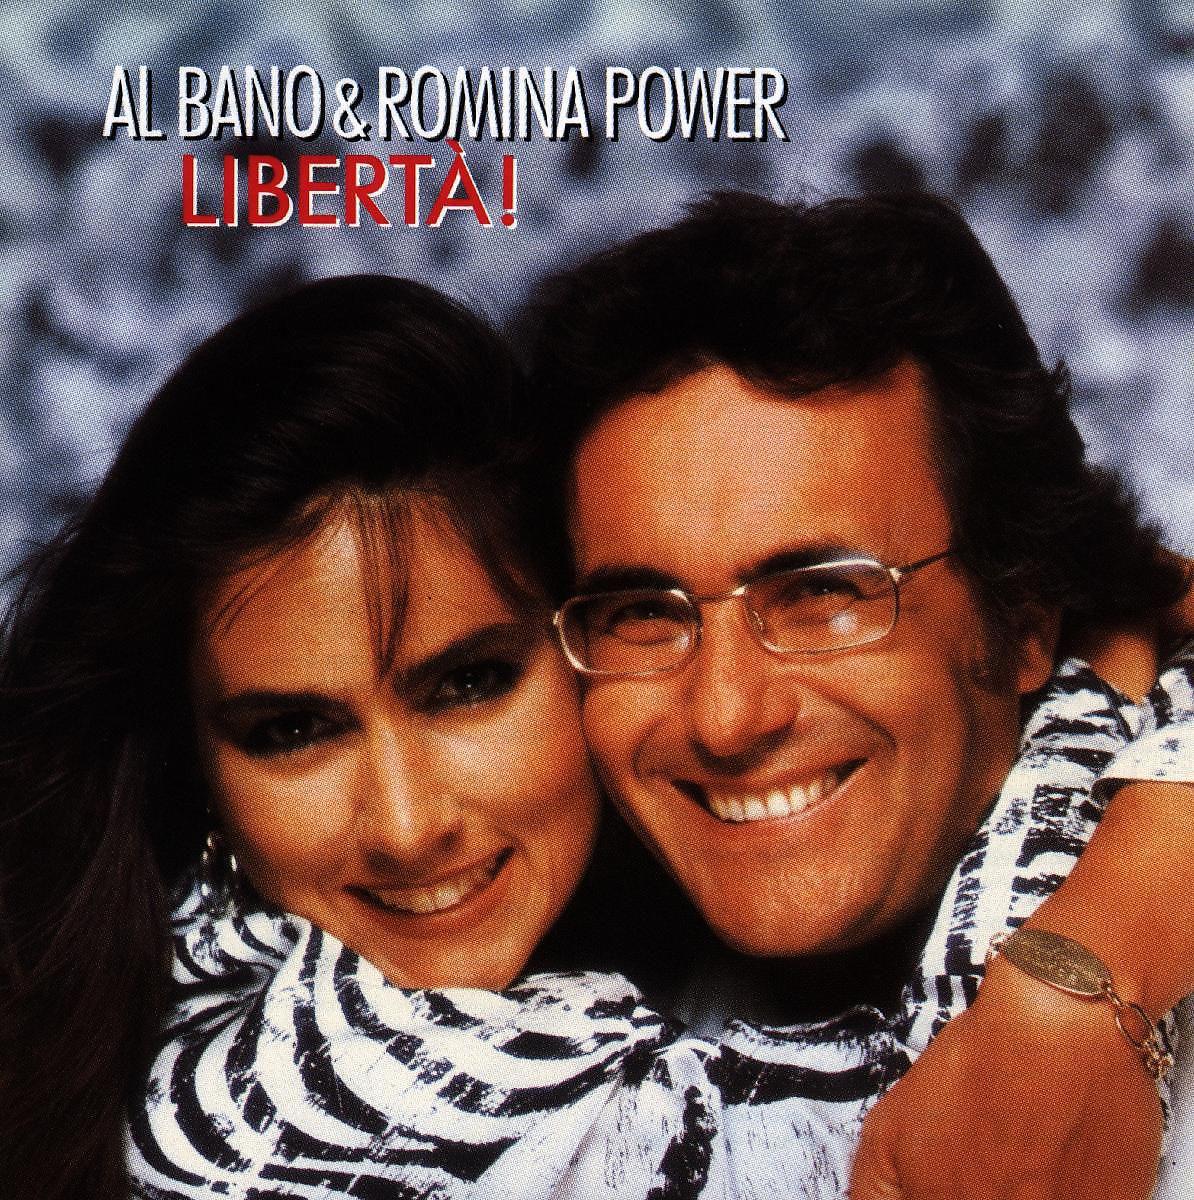 Аль бано и ромина либерта. Аль Бано и Ромина Пауэр. Аль Бано и Ромина Liberta. Al bano & Romina Power Liberta 1987 LP.